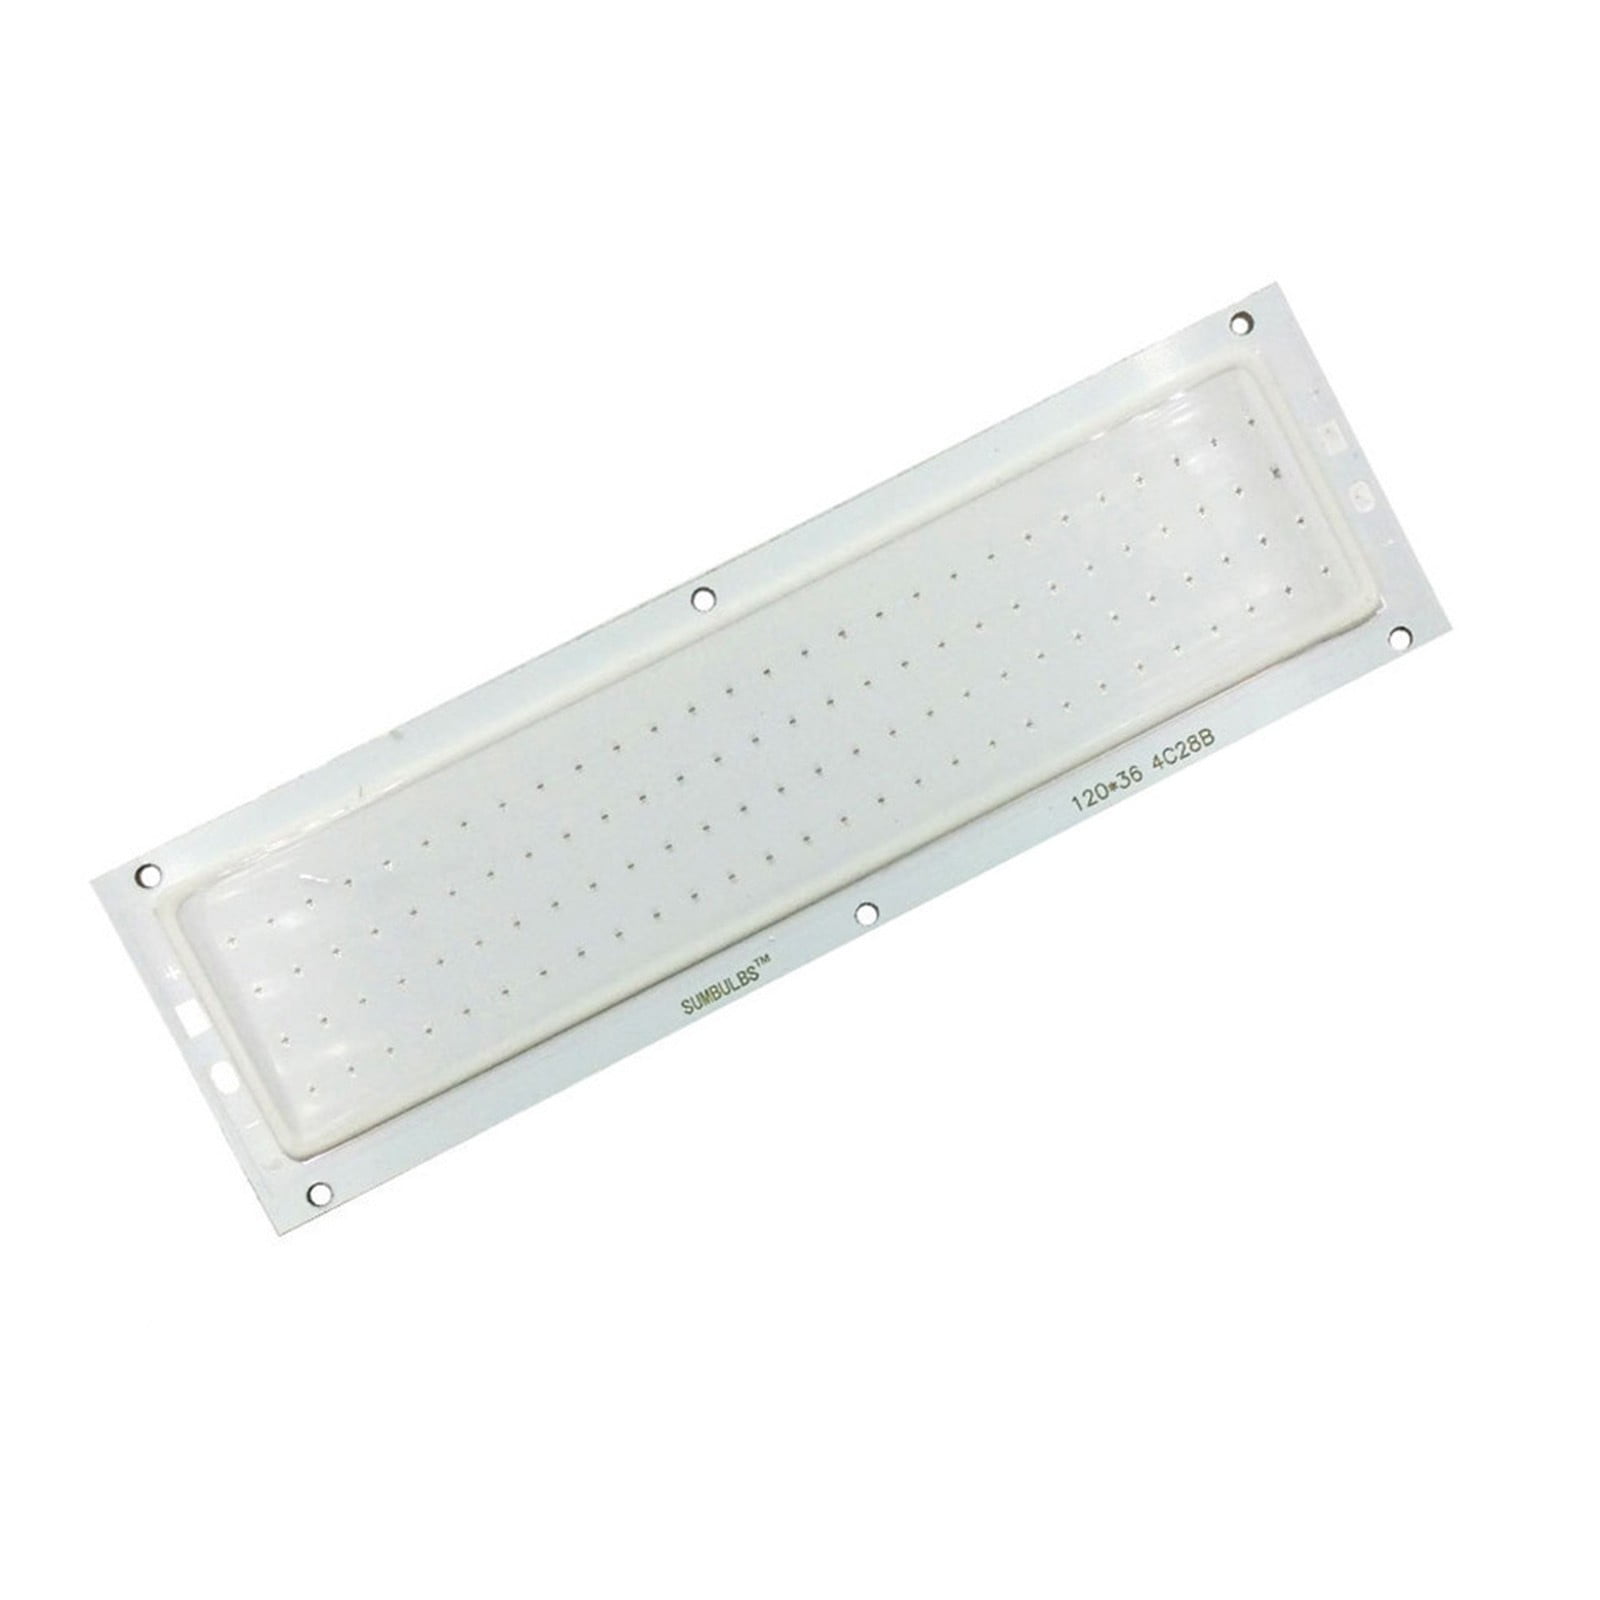 1000LM 10W COB LED Strip Light High Power Lamp Chip Warm/Cool White 12V-24 v  nh 